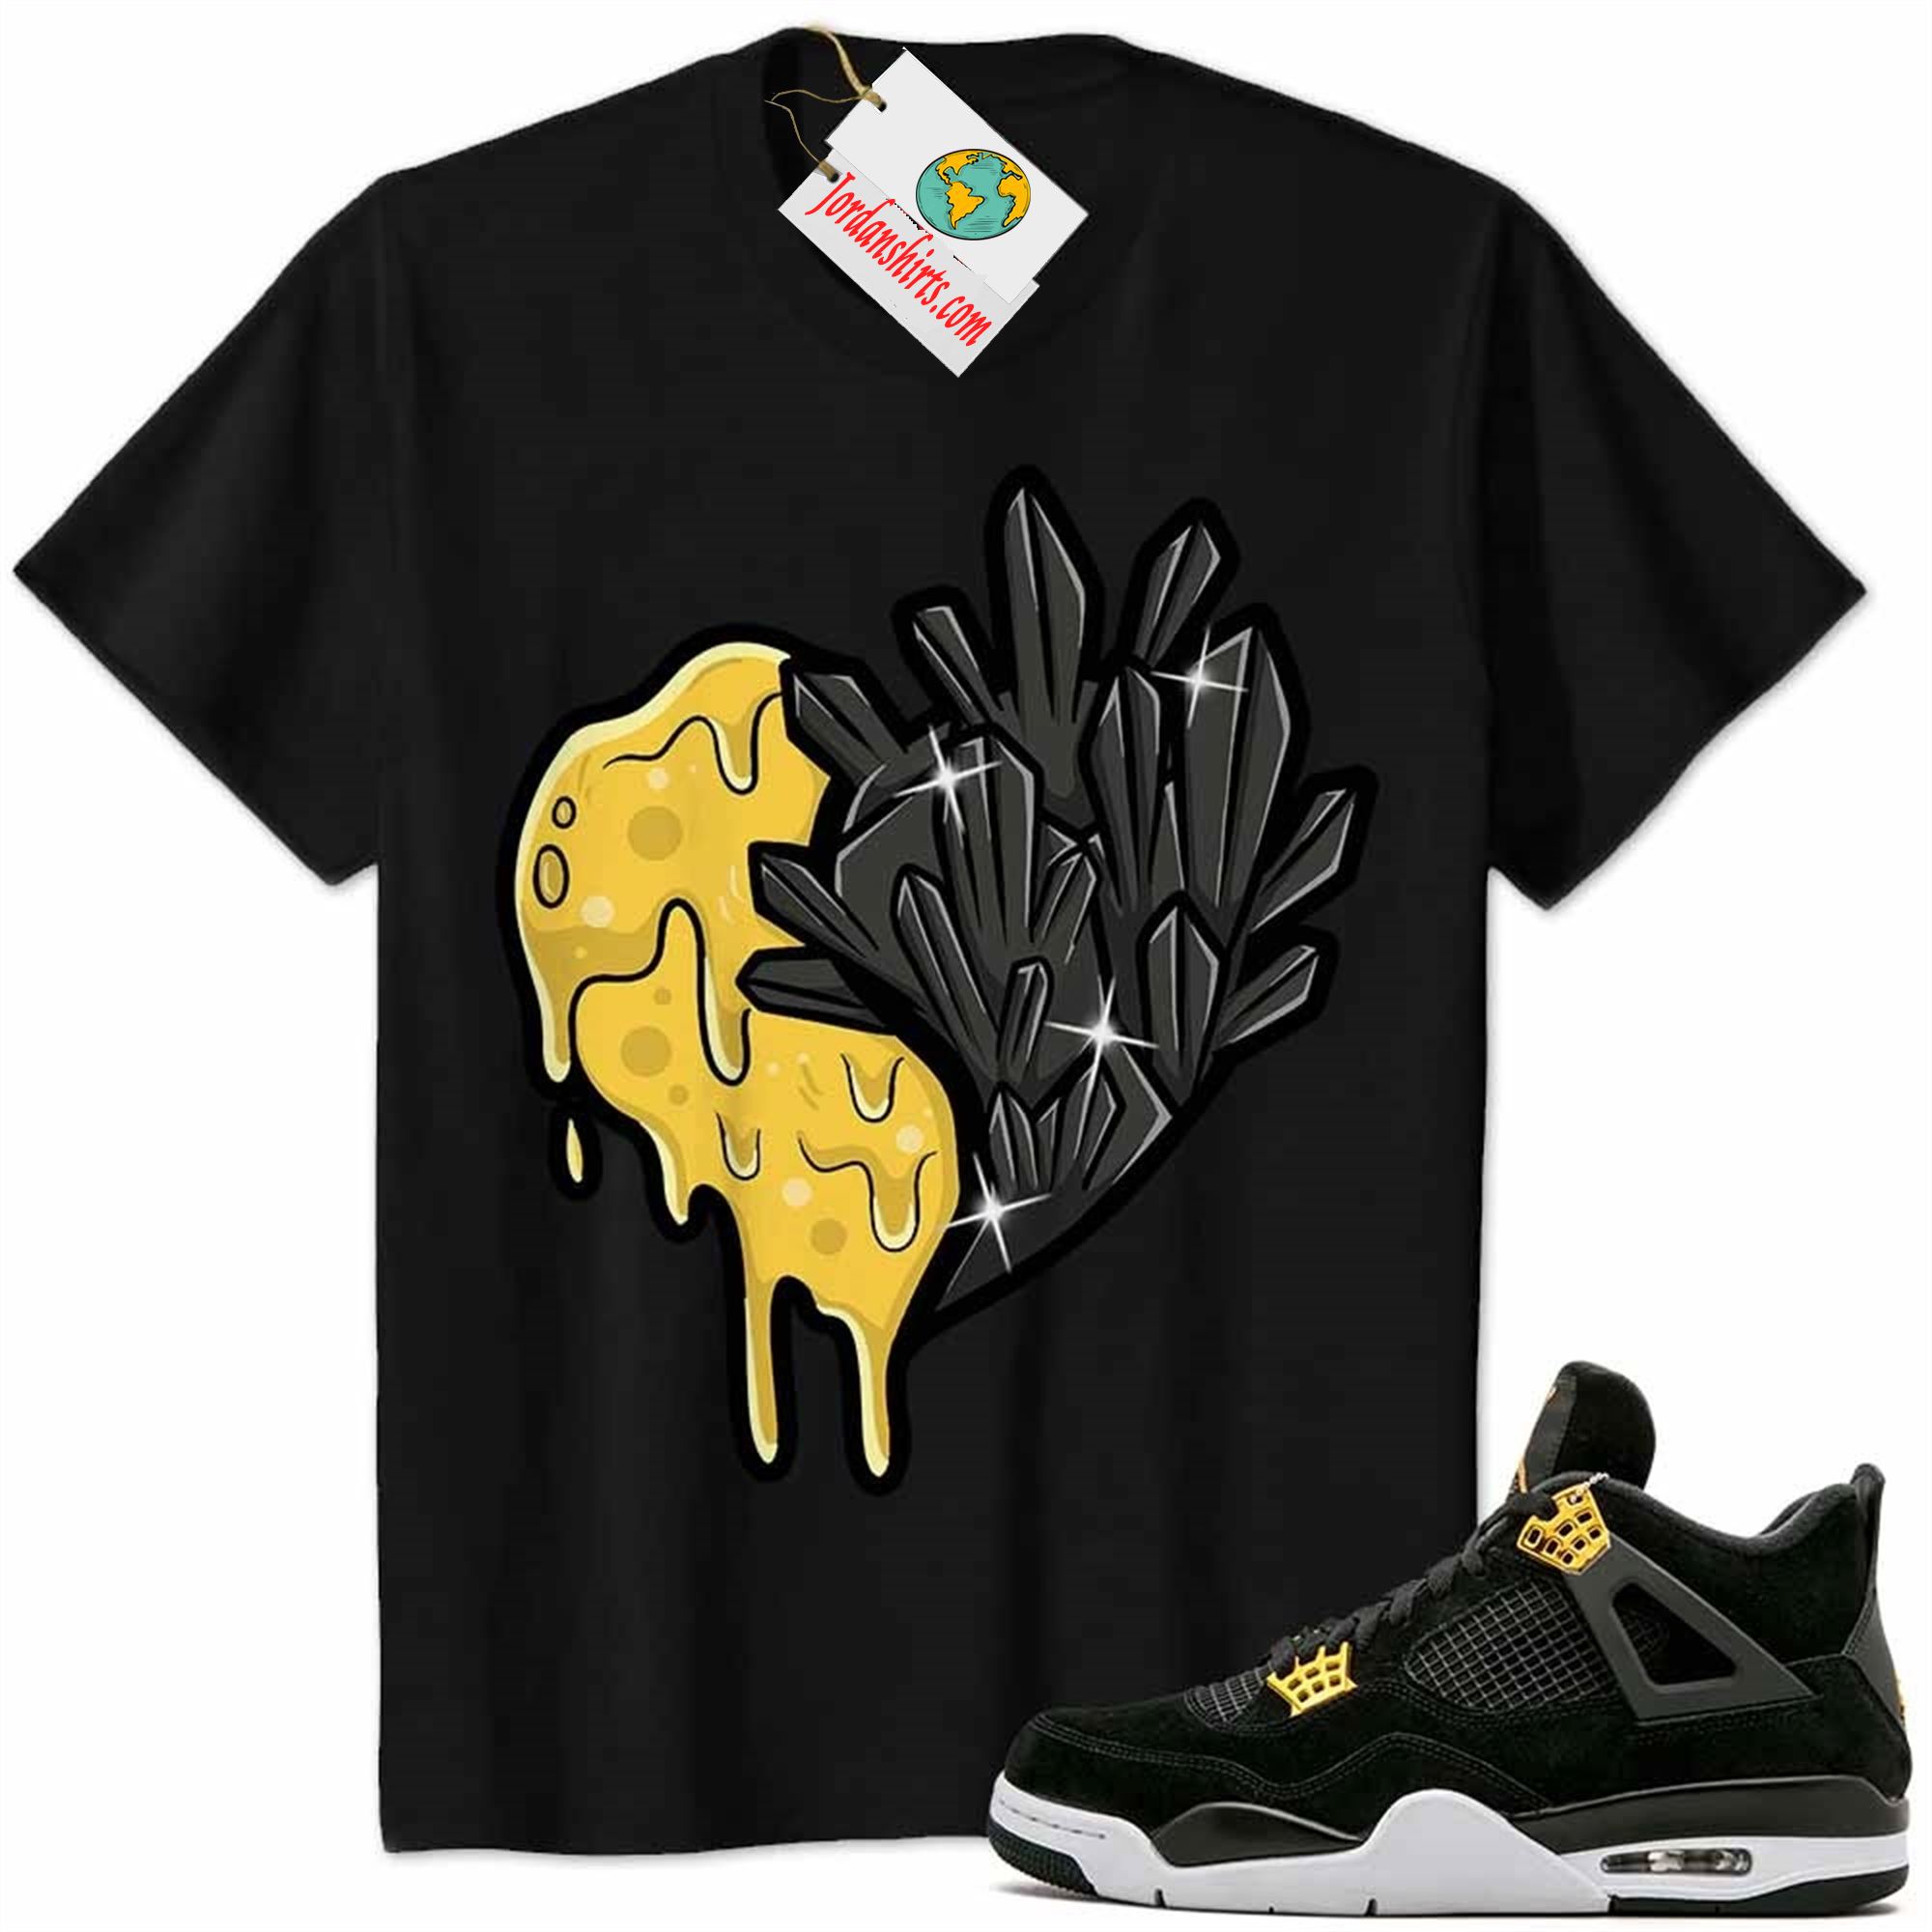 Jordan 4 Shirt, Crystal And Melt Heart Black Air Jordan 4 Royalty 4s Plus Size Up To 5xl